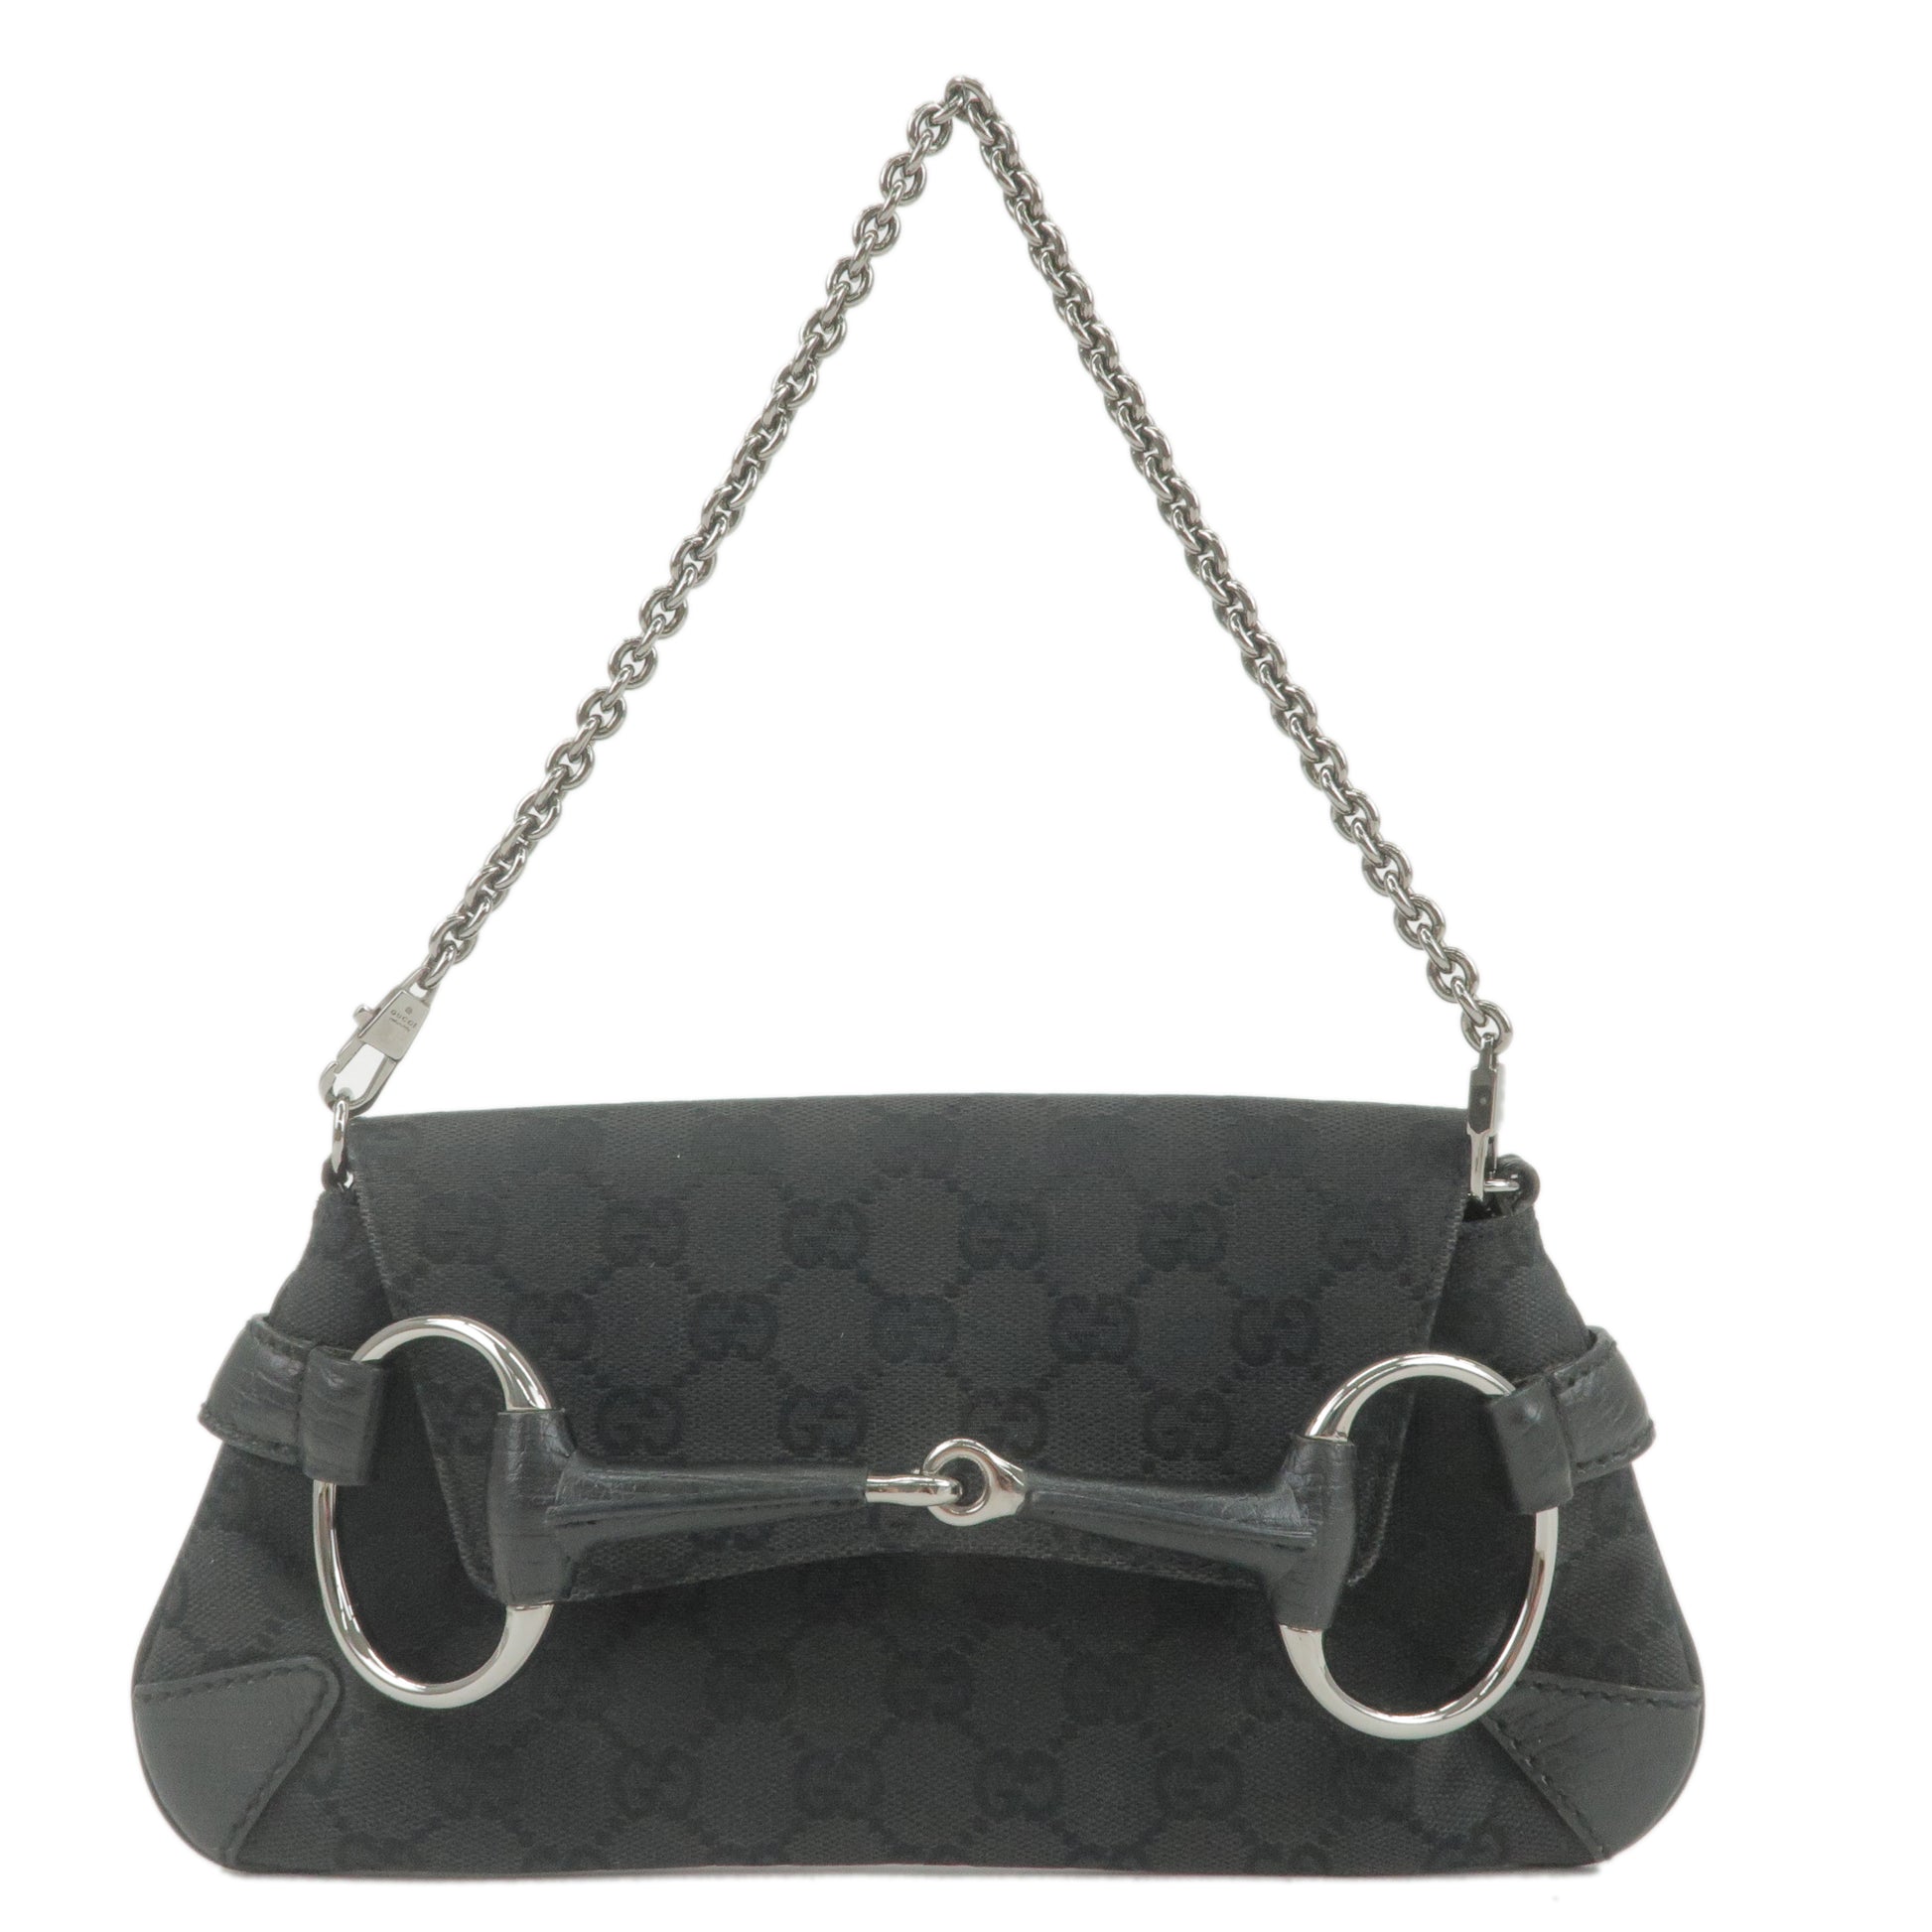 Gucci Horsebit 1955 top handle bag for Women - Black in KSA